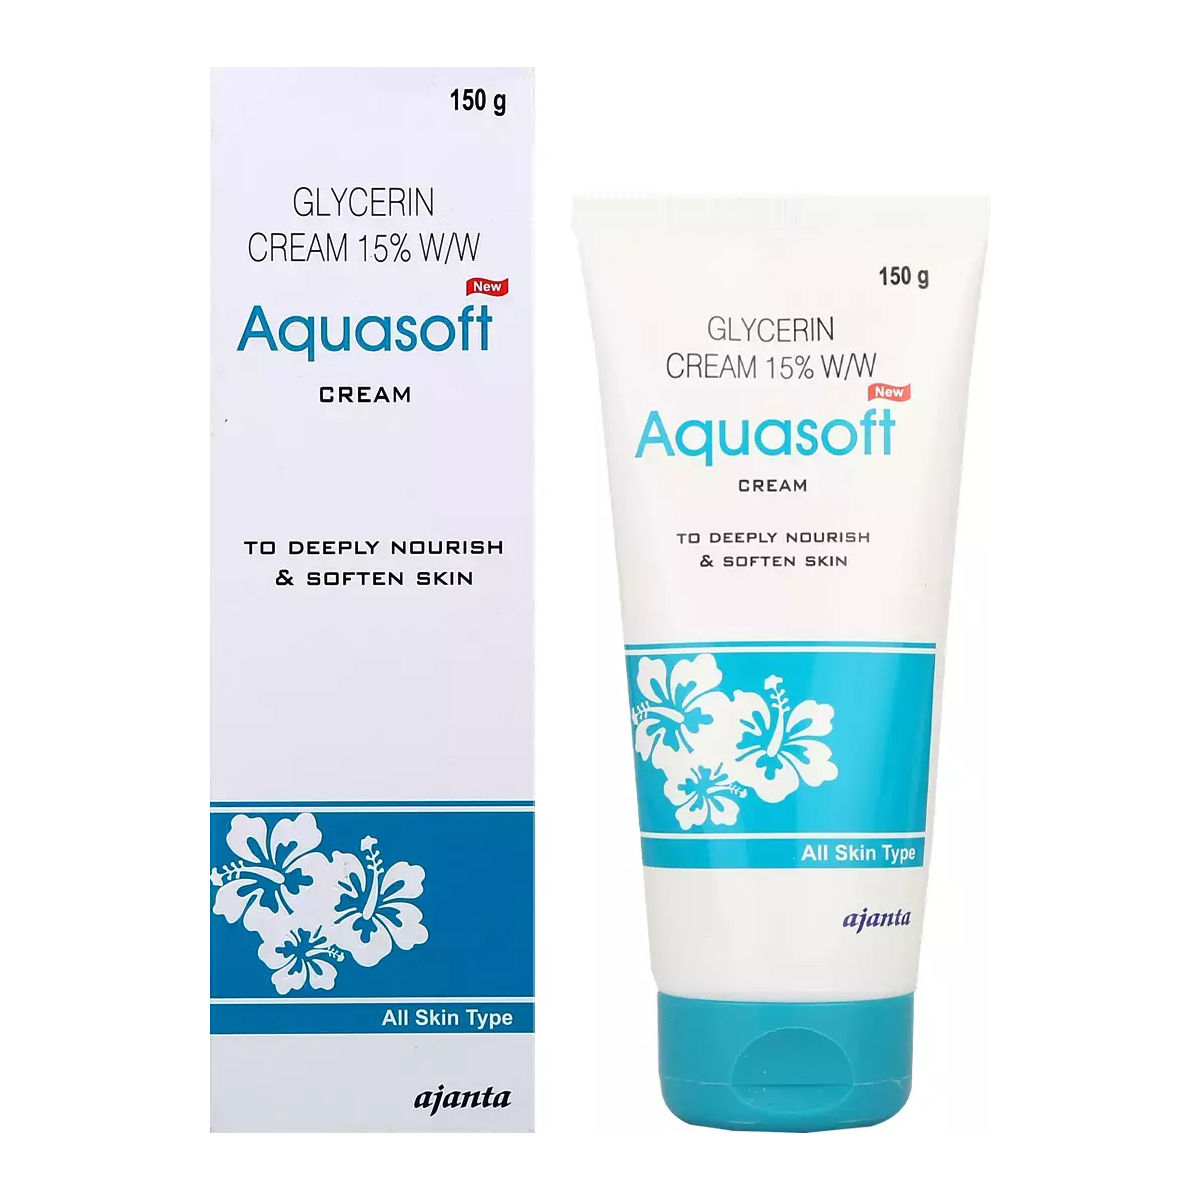 Aquasoft Cream, 150 gm, Pack of 1 